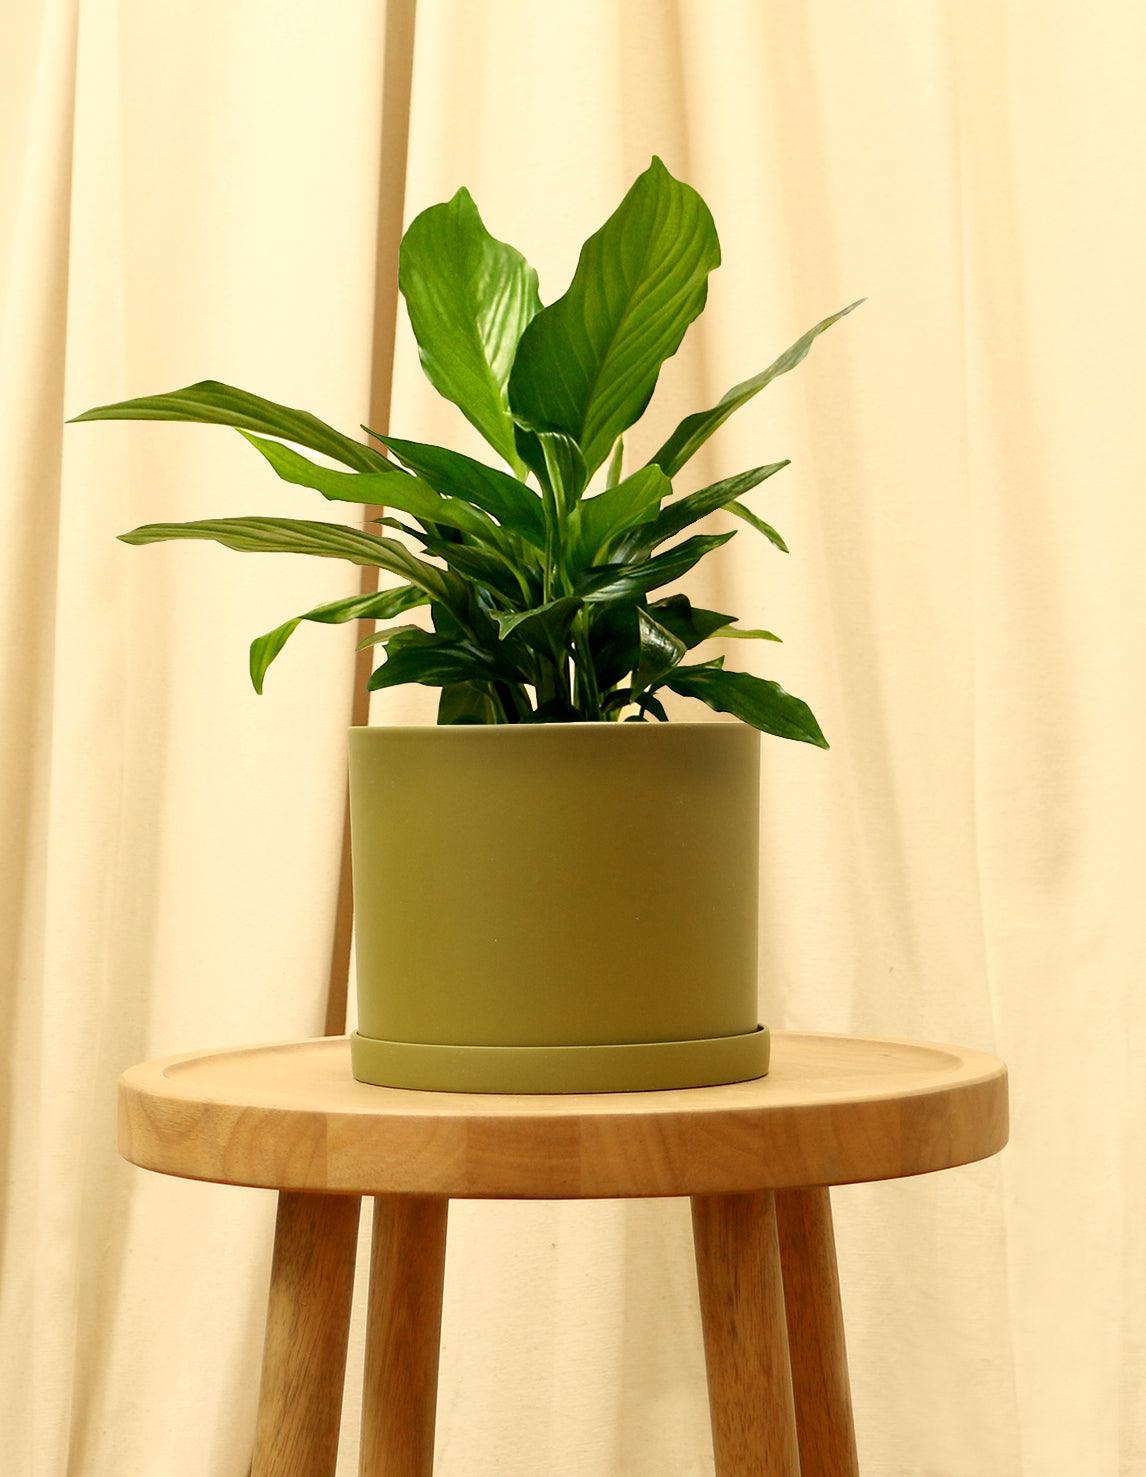 Medium Peace Lily in green pot.